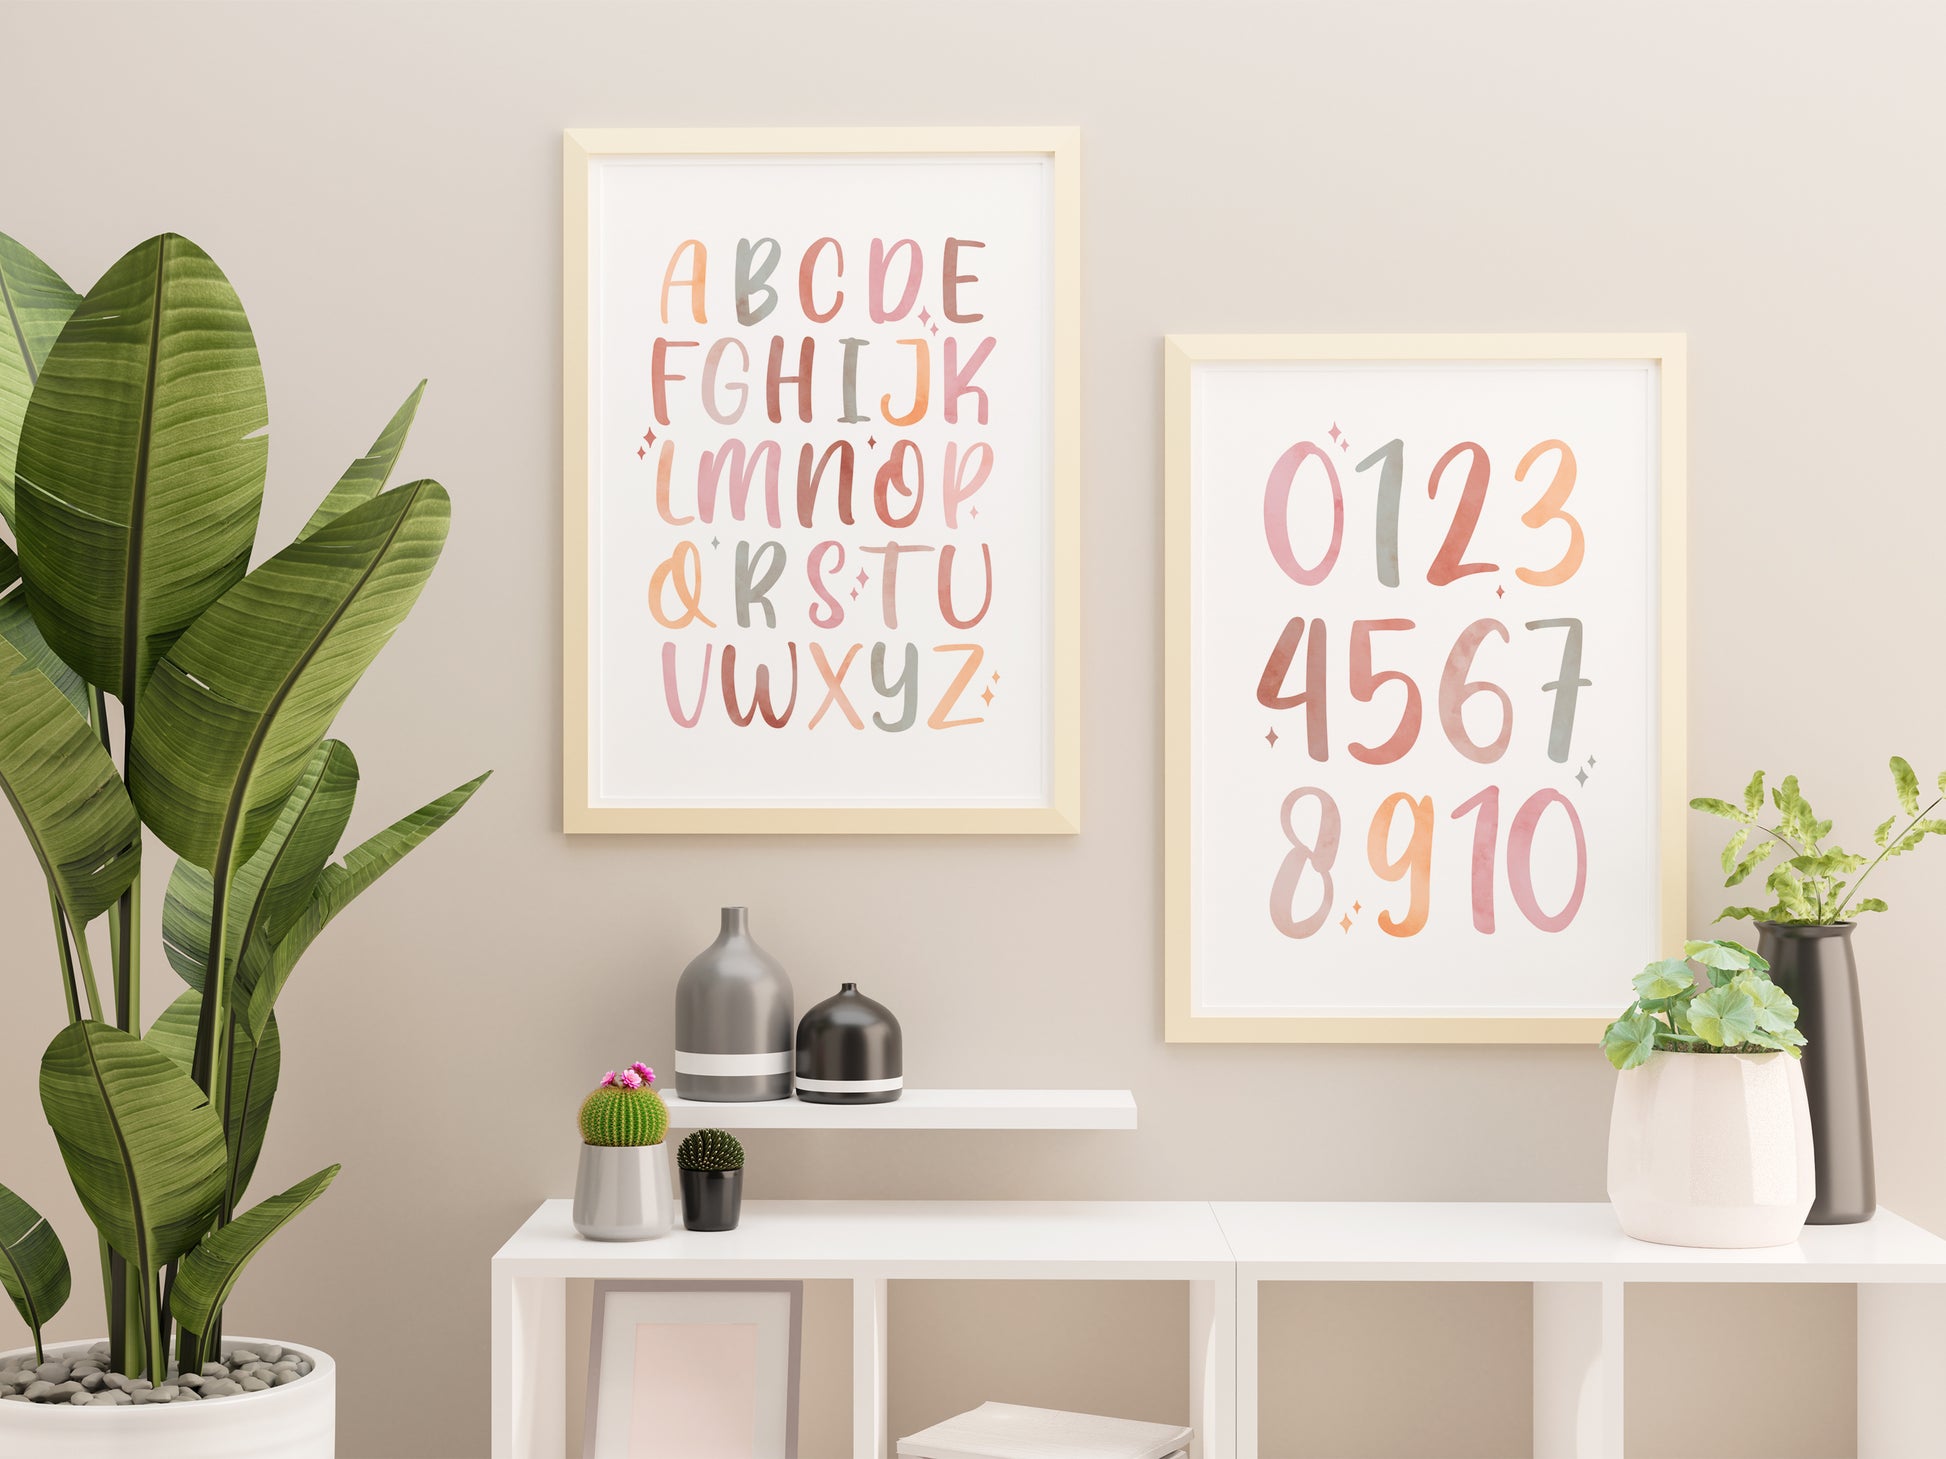 Neutral Kids Alphabet and Number Print Set of 2 - Nursery Wall Art - Typelab